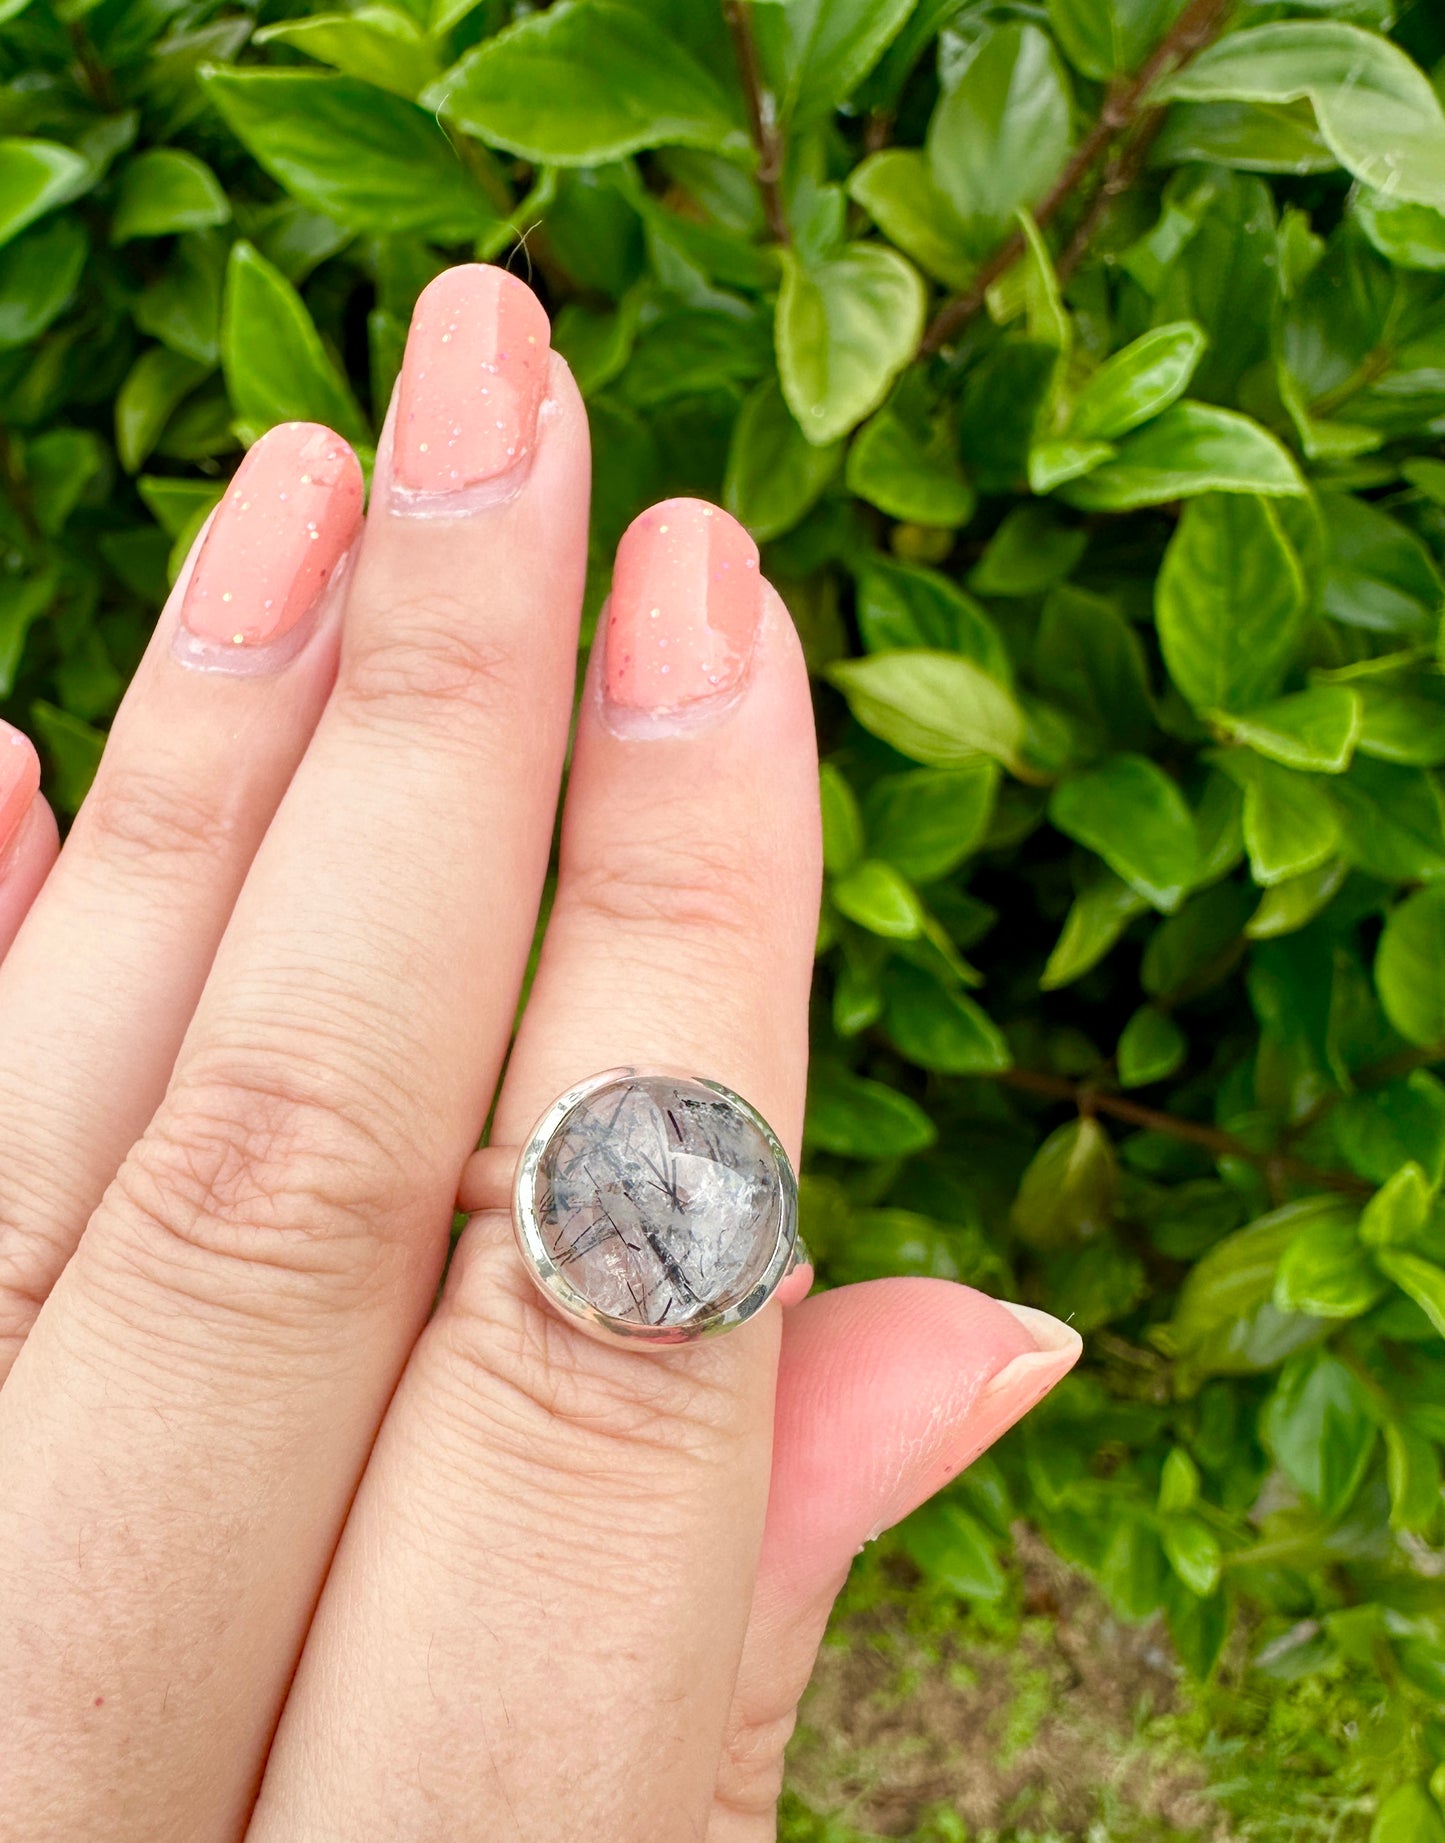 Striking Black Tourmaline in Quartz Ring, Sterling Silver Size 7 - Protective Stone, Elegant and Modern Jewelry, Unique Design